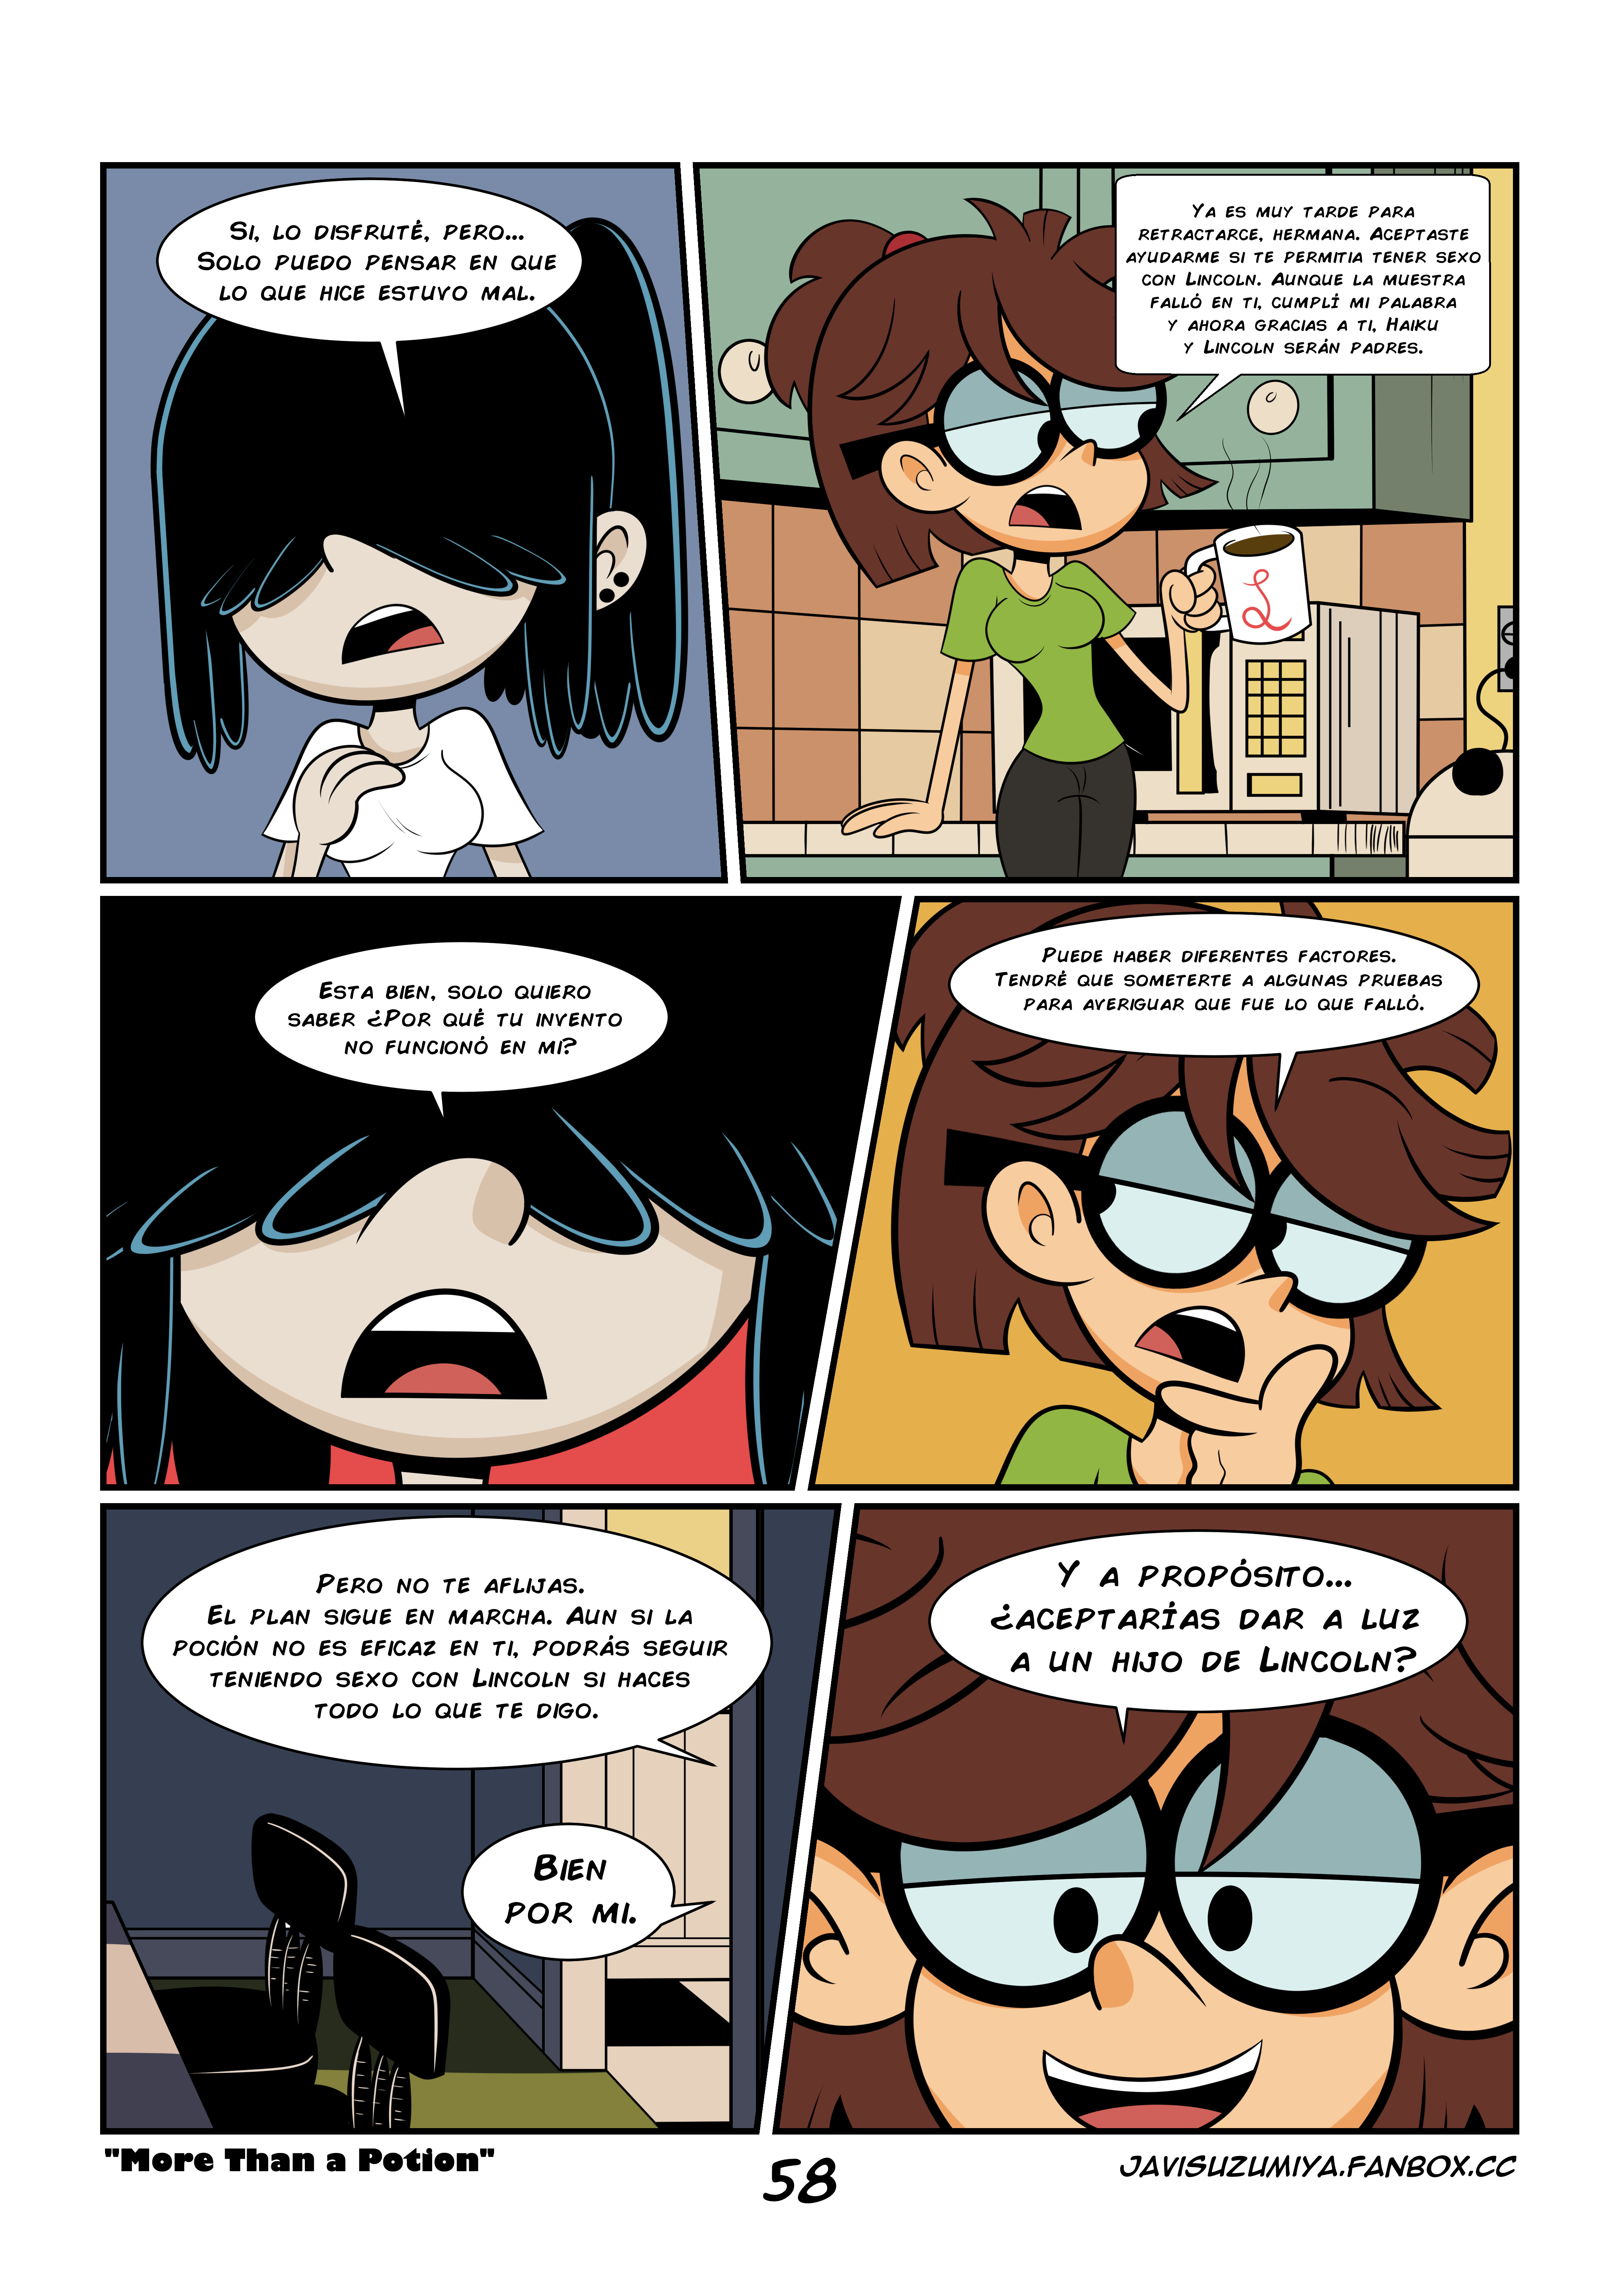 More Than A Potion Comic More Than a Potion - Page 58 - English/Español" by javisuzumiya from Pixiv  Fanbox | Kemono